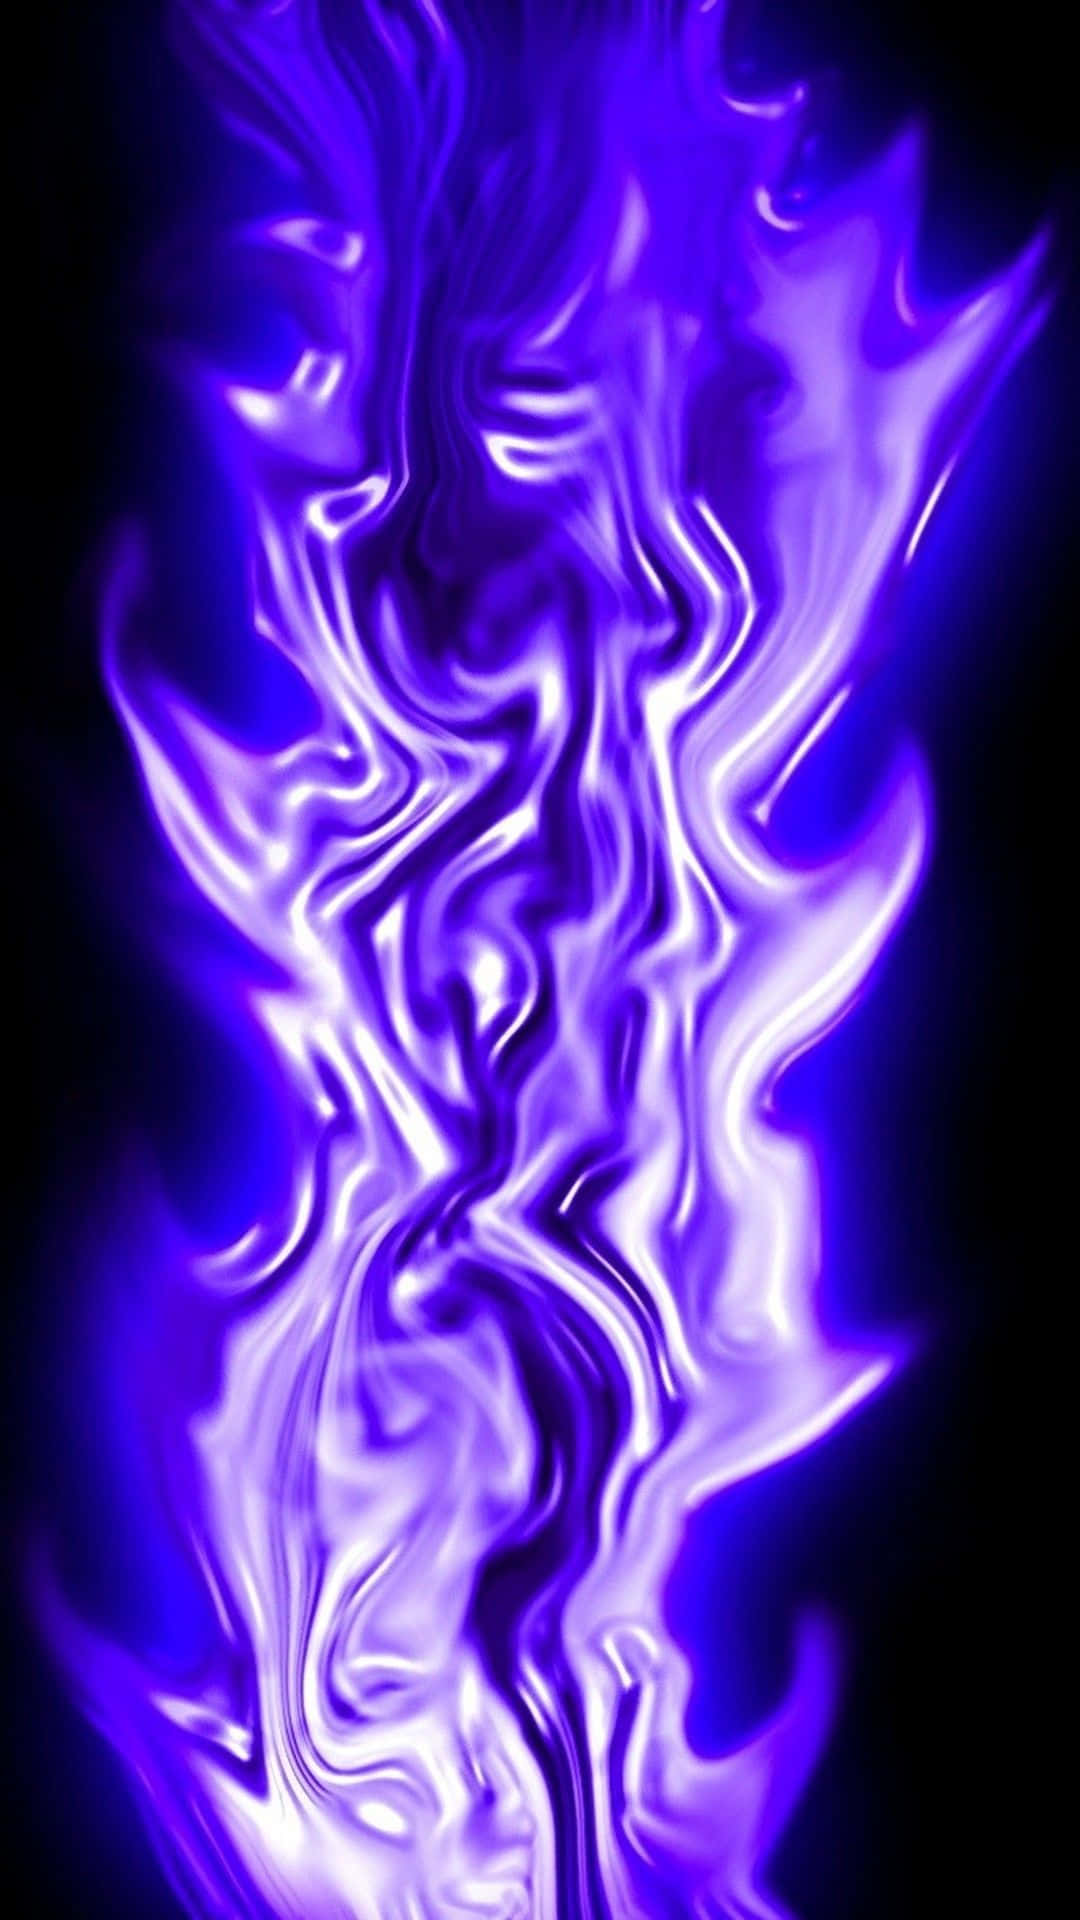 A blazing fire engulfed in a divine purple hue.